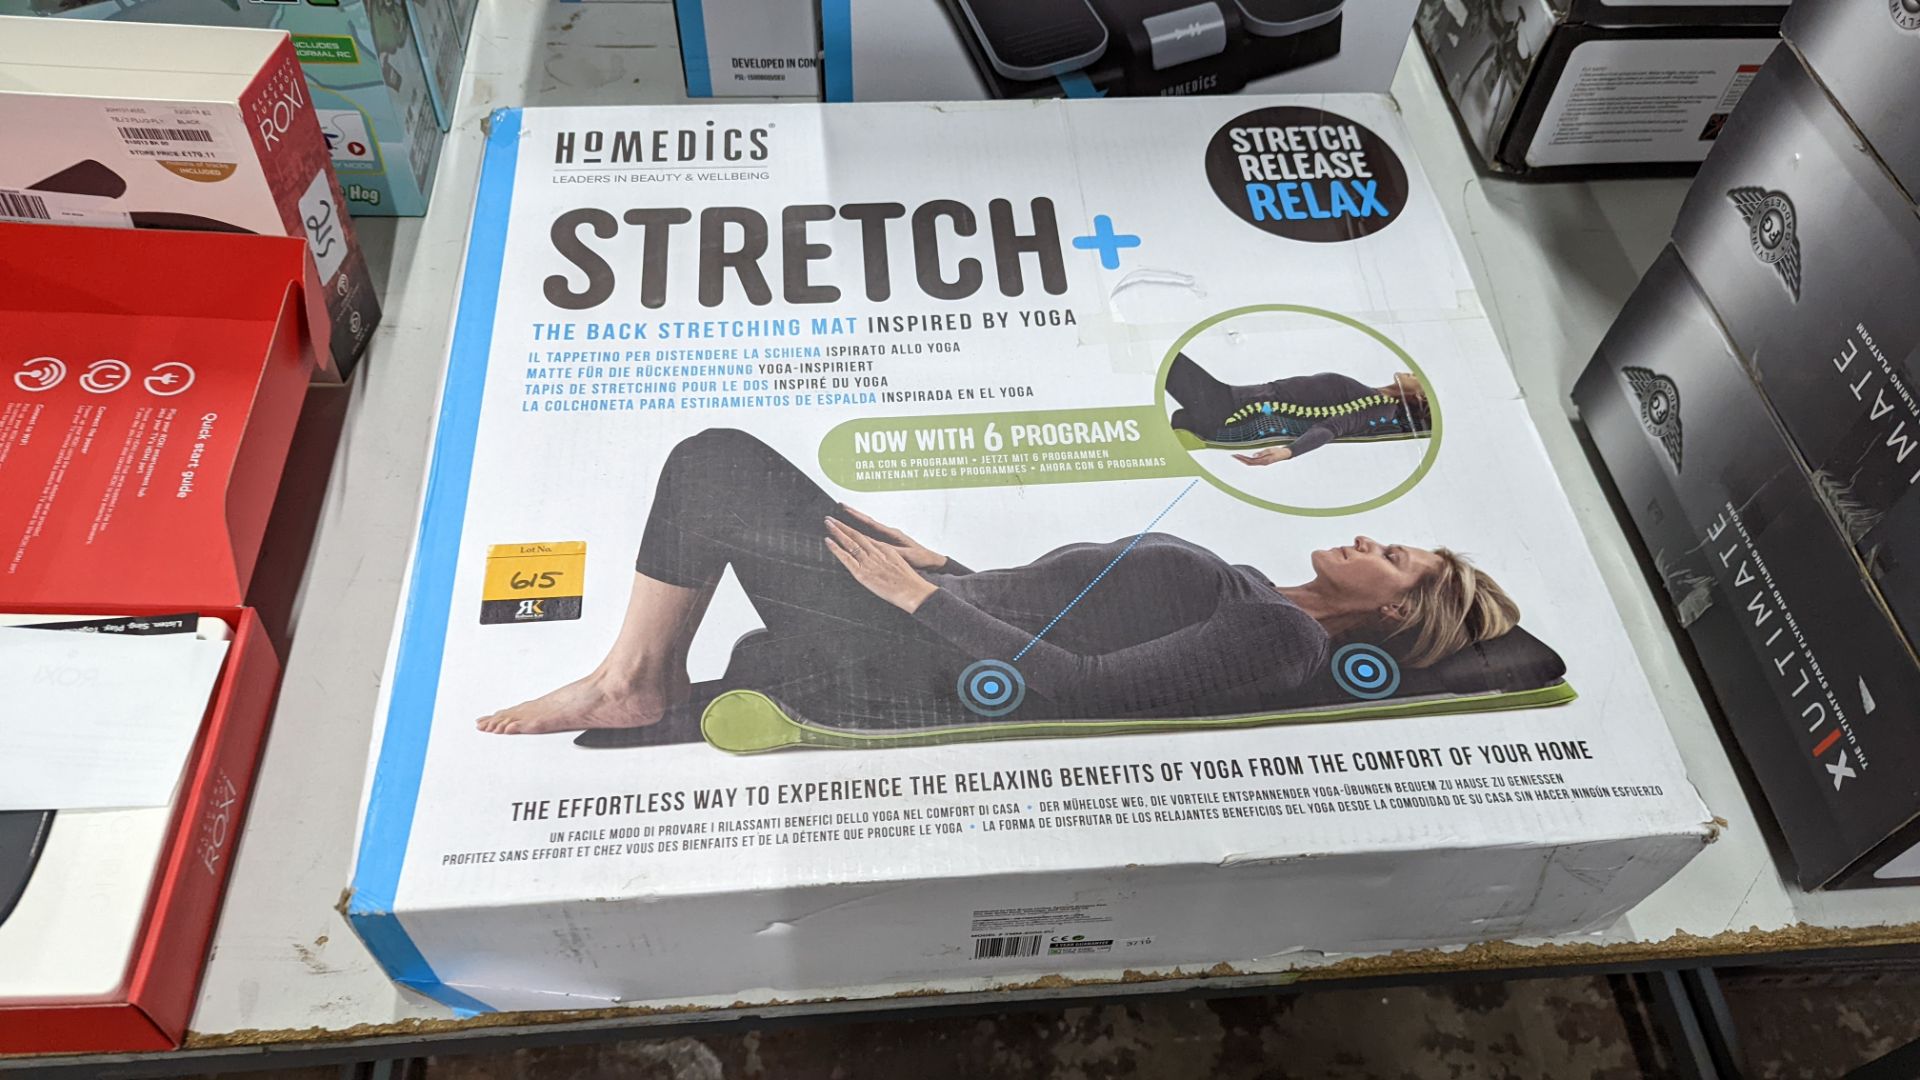 Homedics Stretch+ back stretching mat - Image 2 of 4